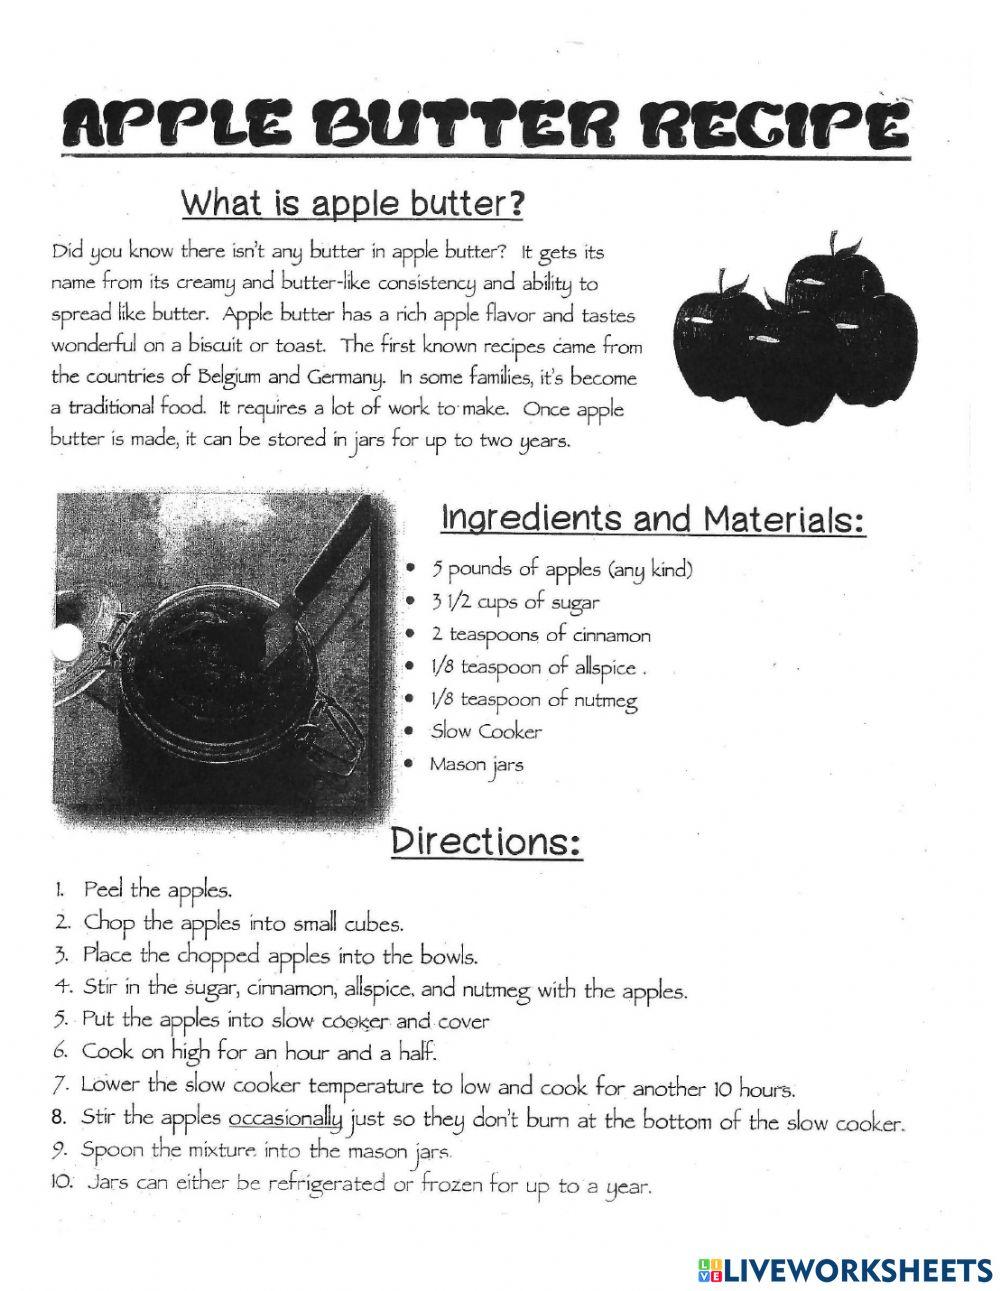 Apple Butter Recipe & Questions